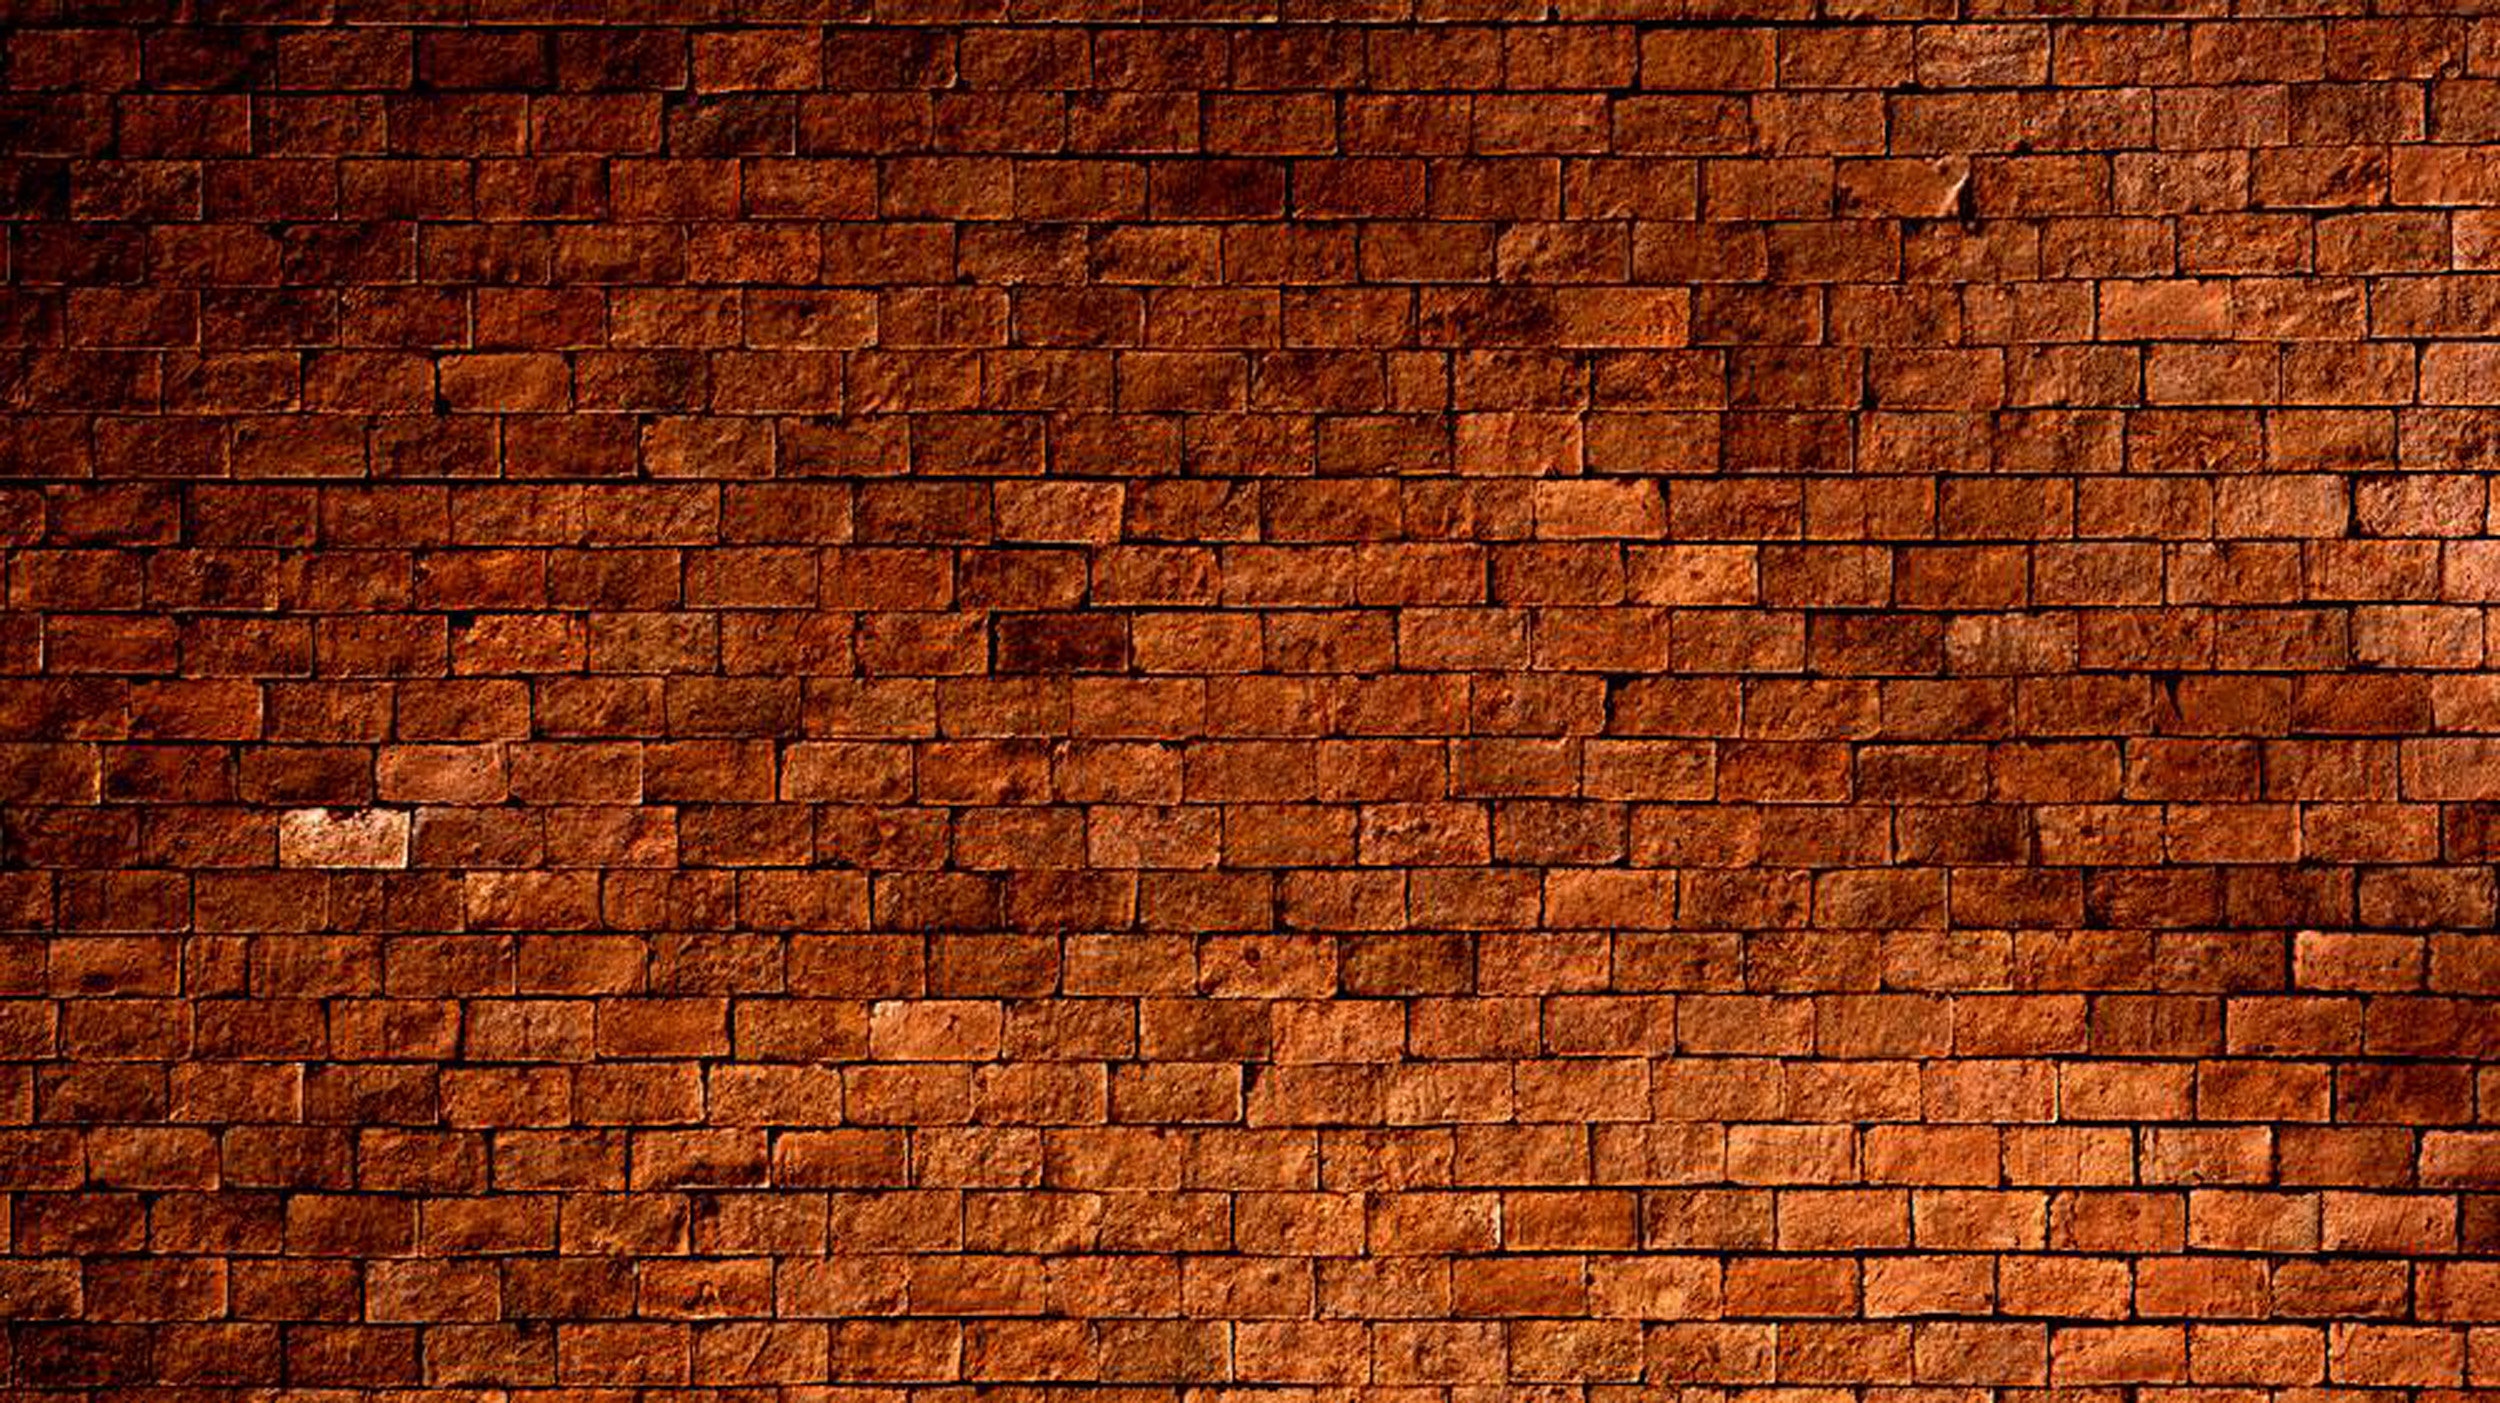 Brick Wall Design Ideas For Your Home | DesignCafe